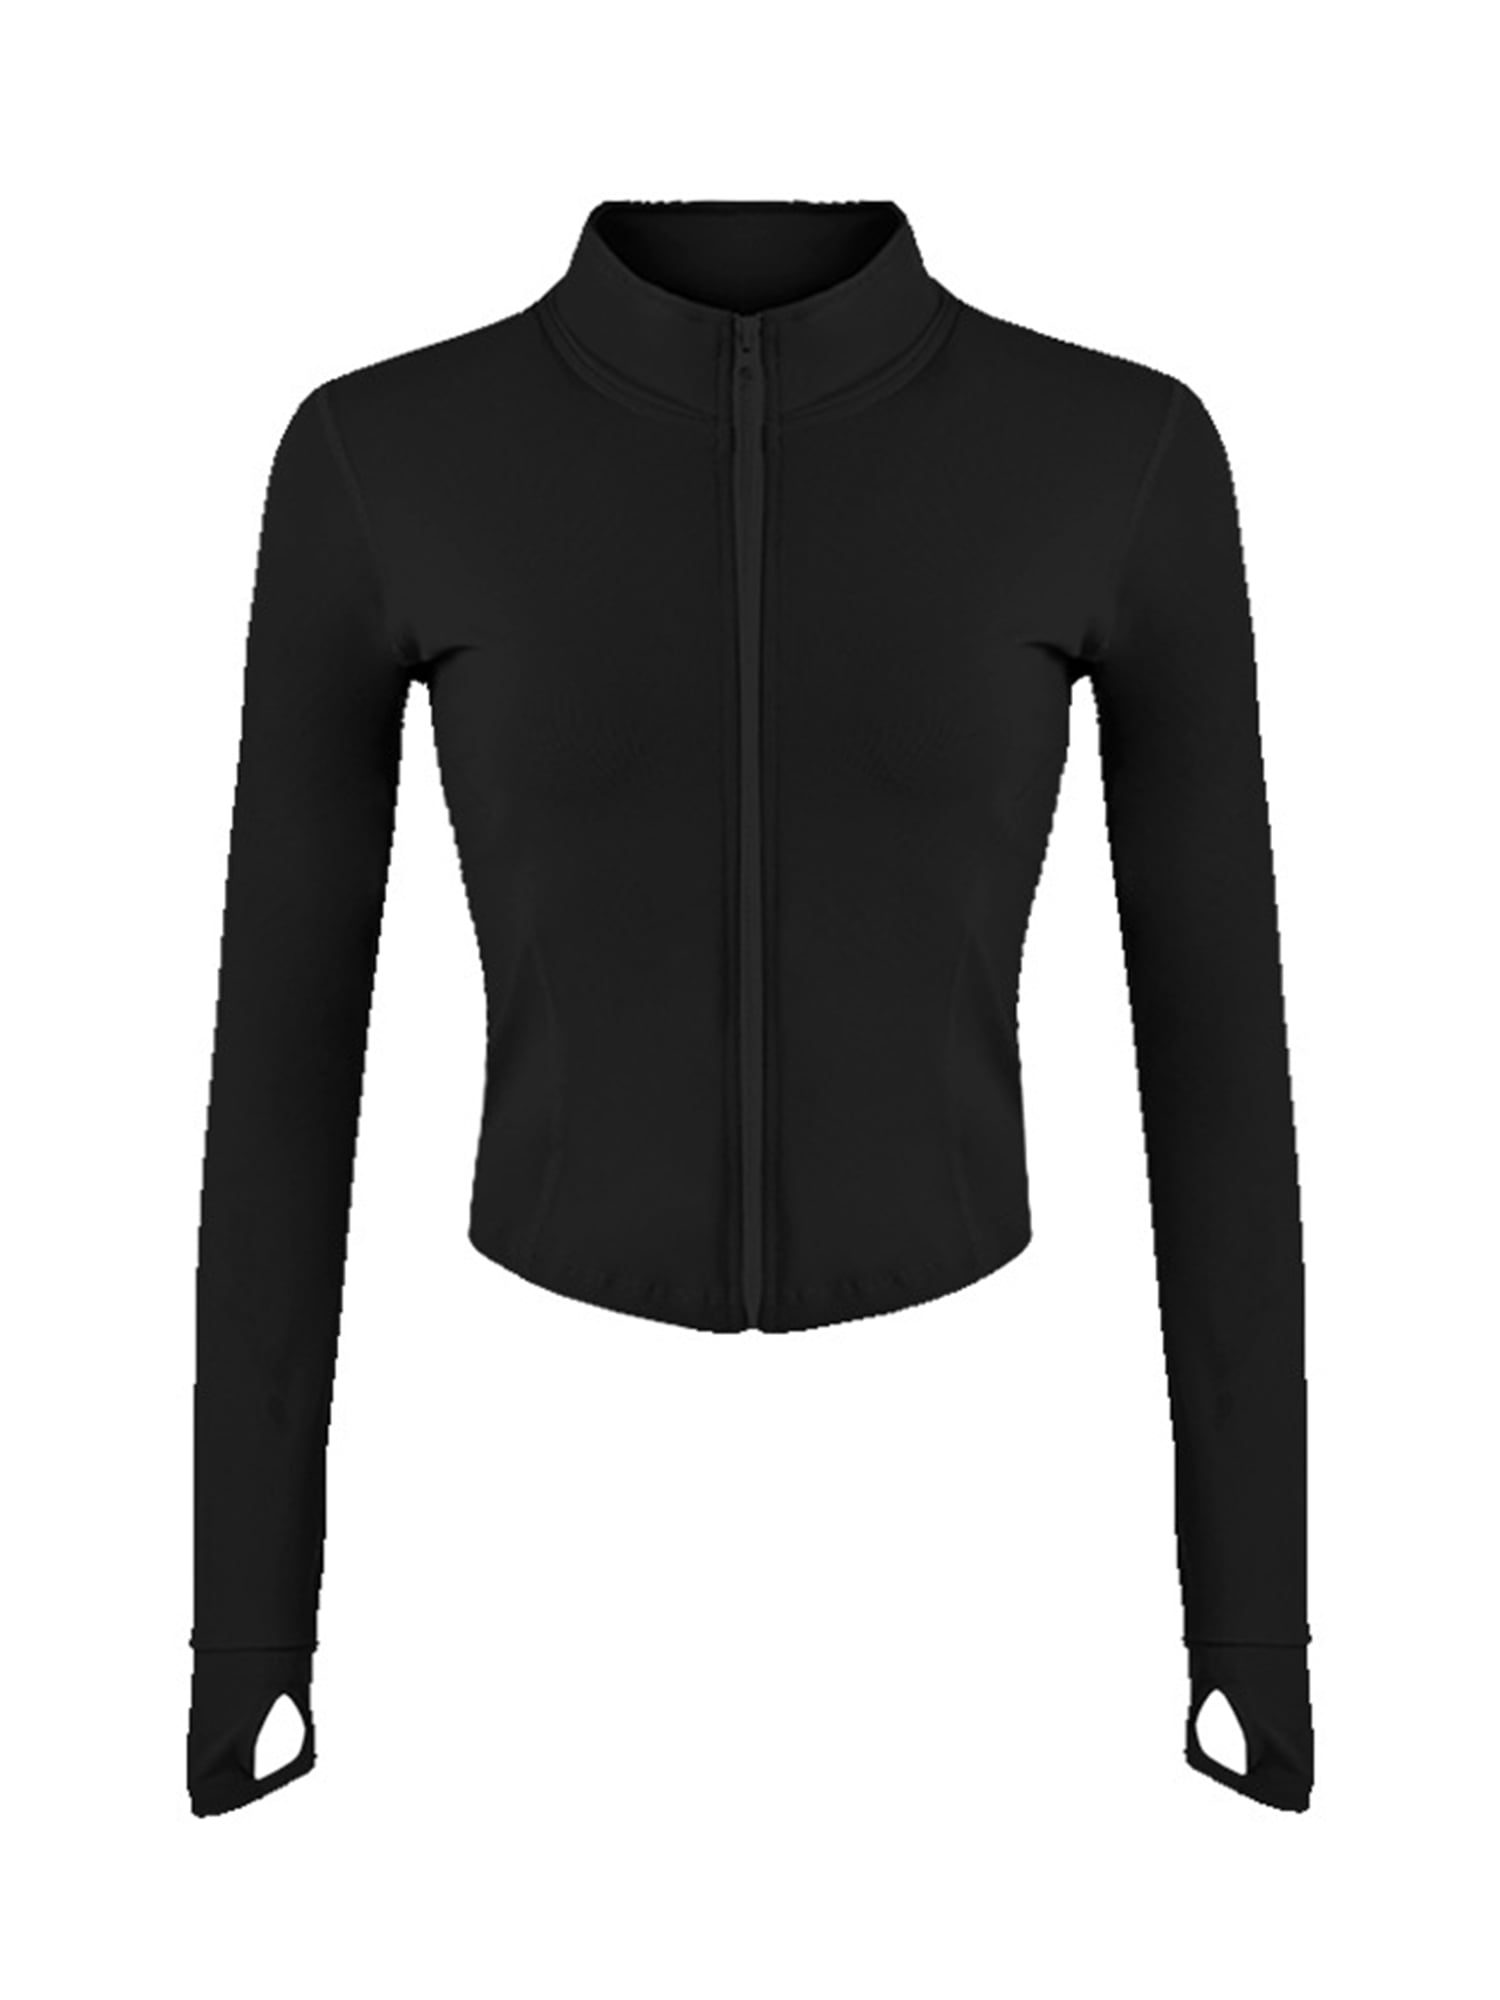 Black Speckle Zip Through Jacket  Active wear, Activewear fashion, Clothes